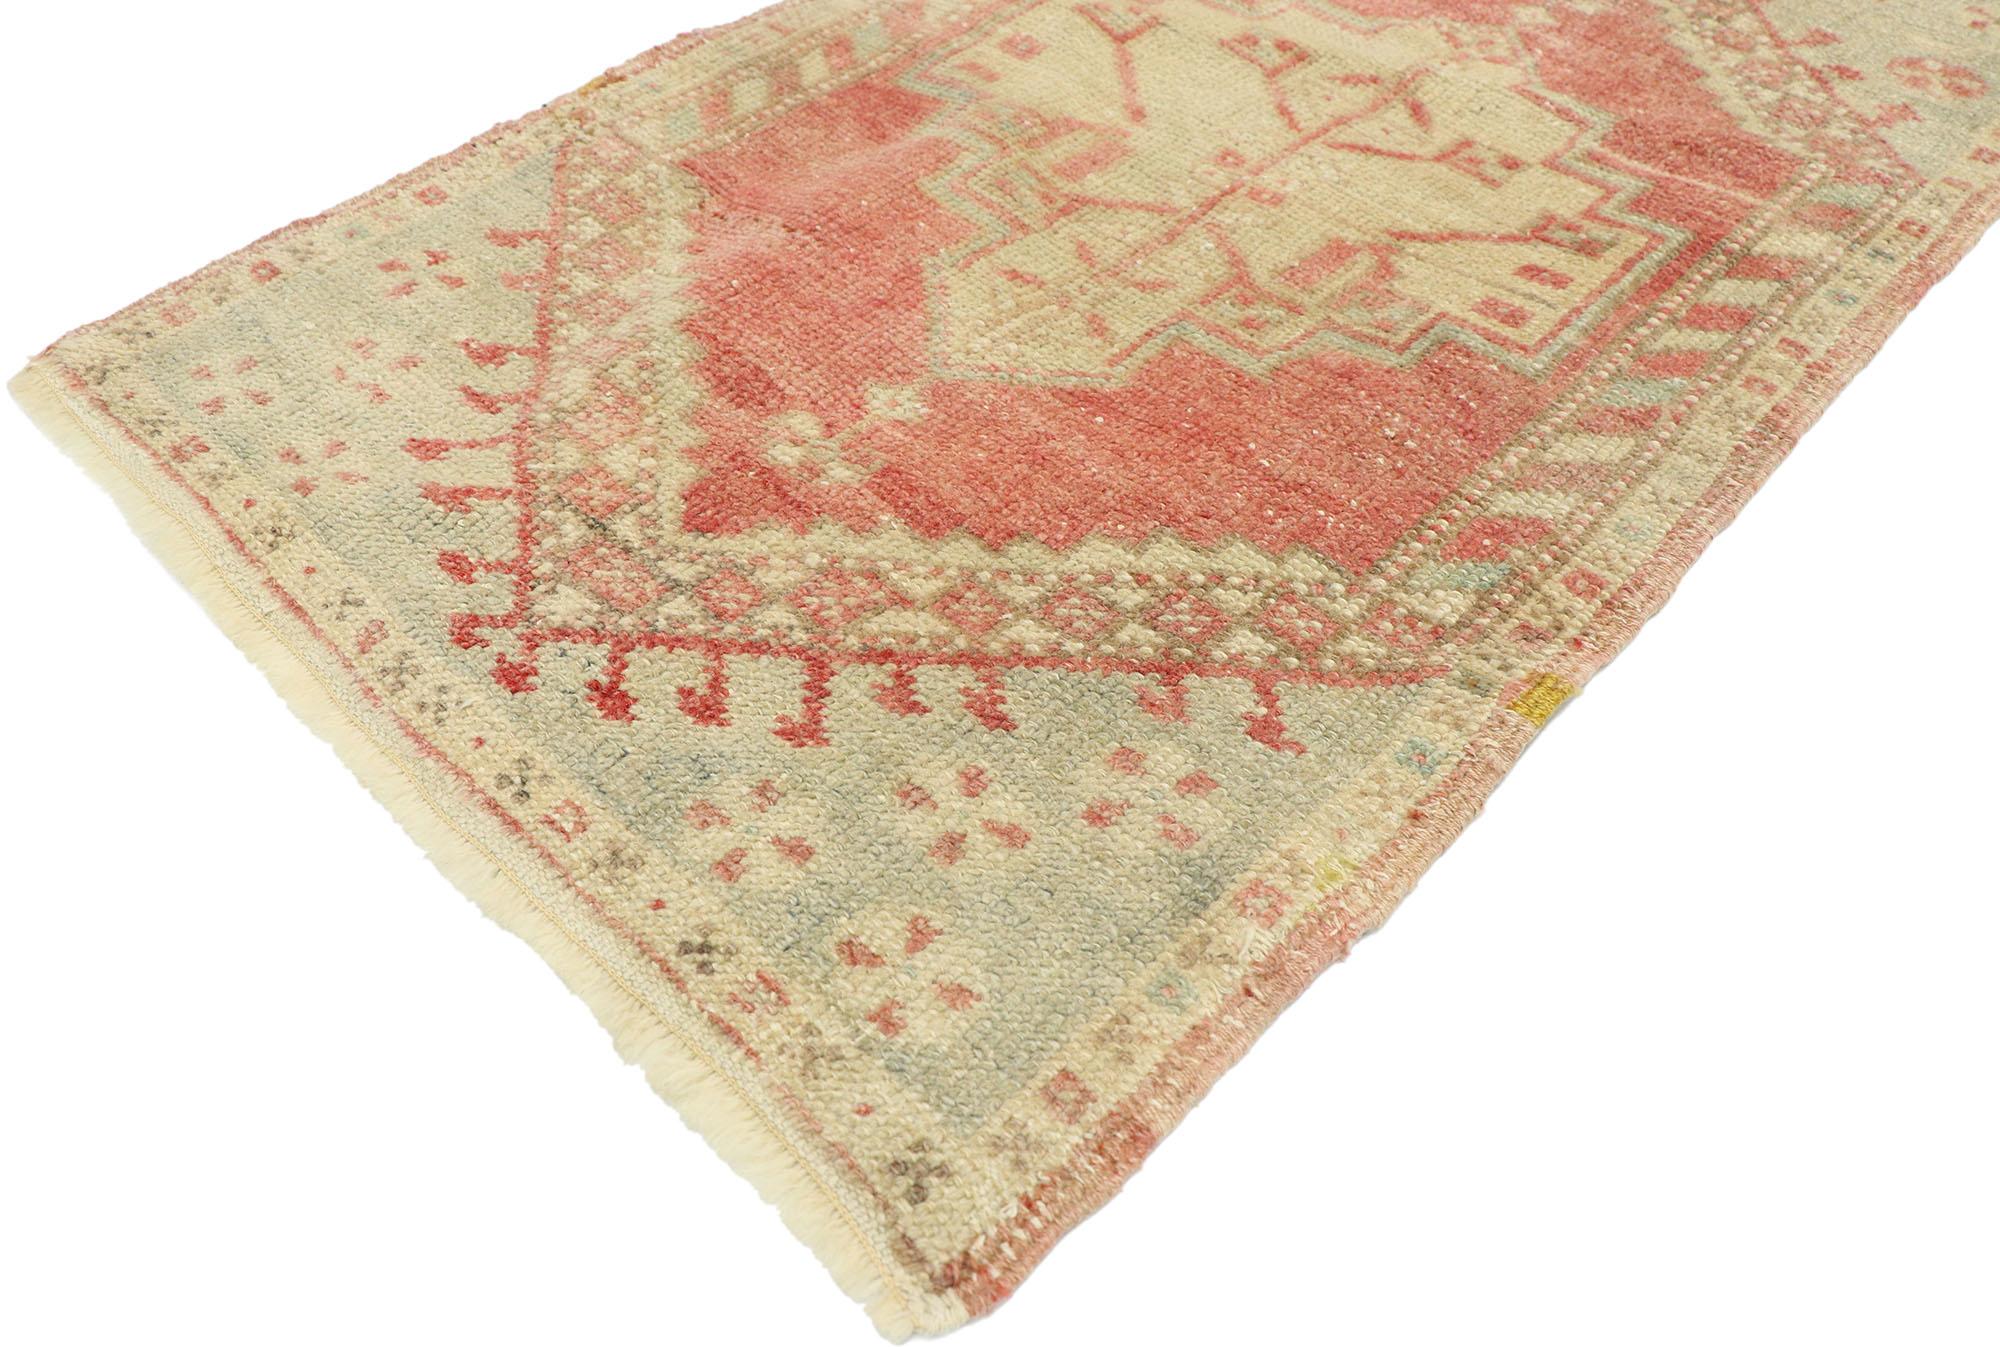 52724 Vintage Turkish Yastik Rug, 01'09 x 03'01. Turkish Yastik rugs, alternatively called 